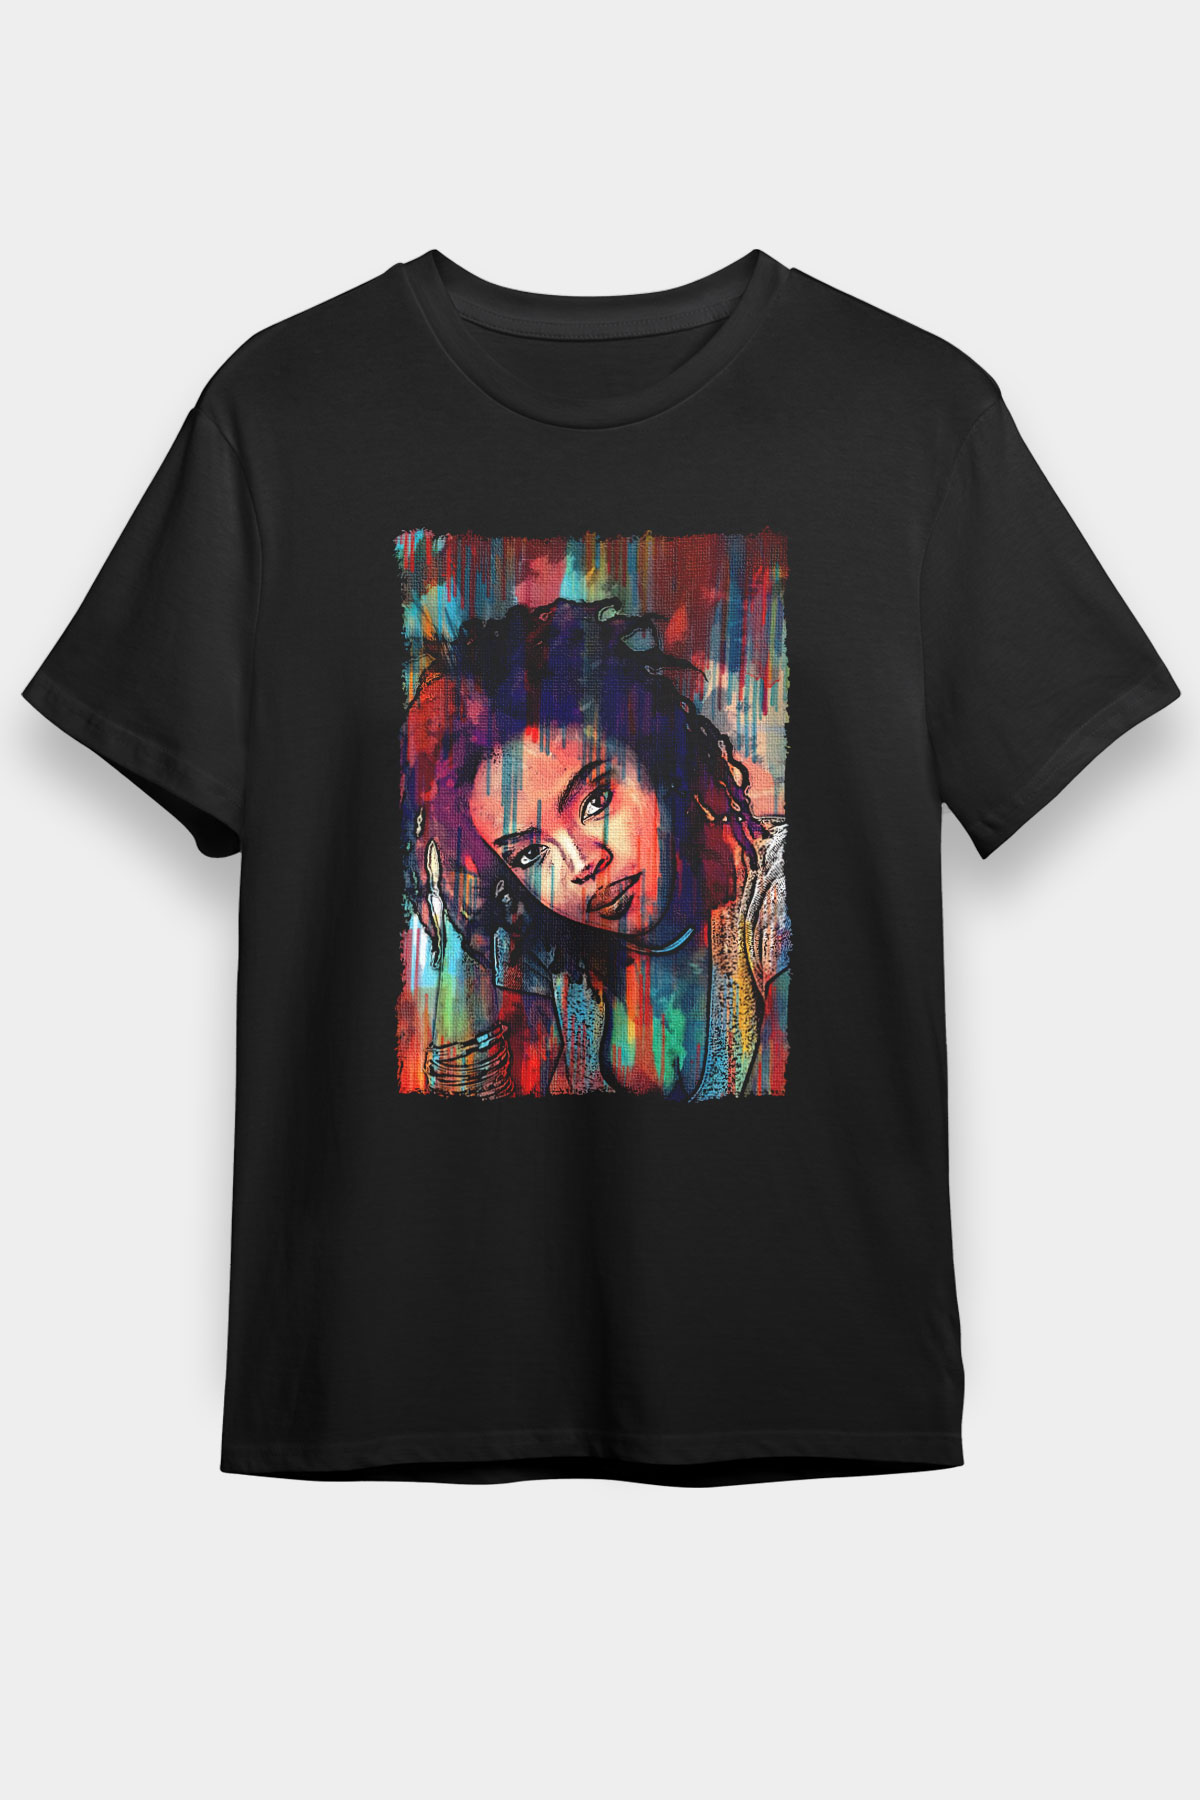 Lauryn Hill T shirt,Hip Hop,Rap Tshirt 07